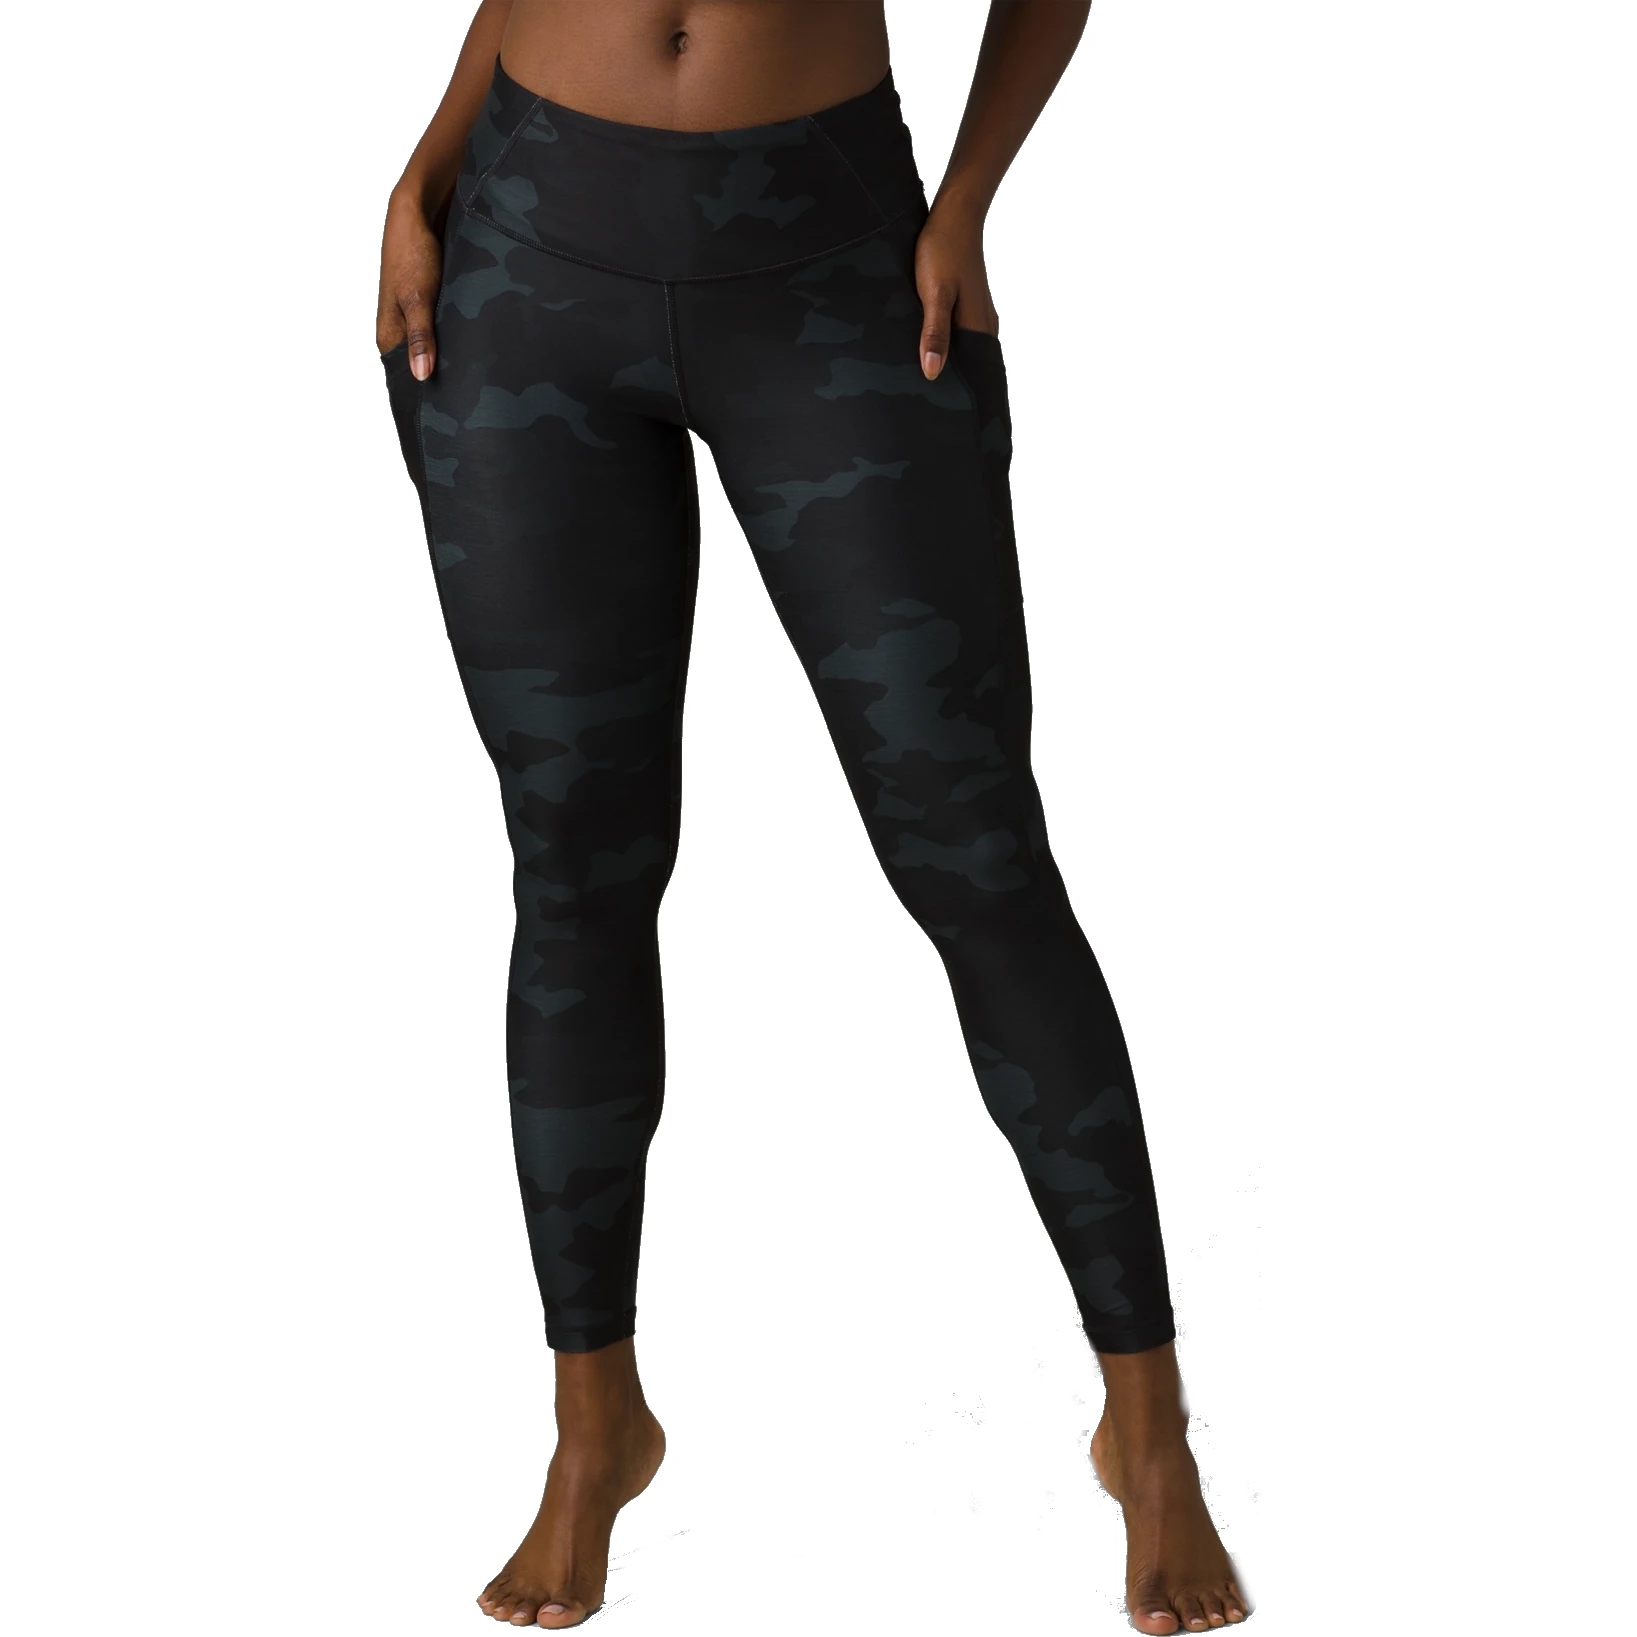 Productfoto van prAna Electa II Legging Women - Black Camo